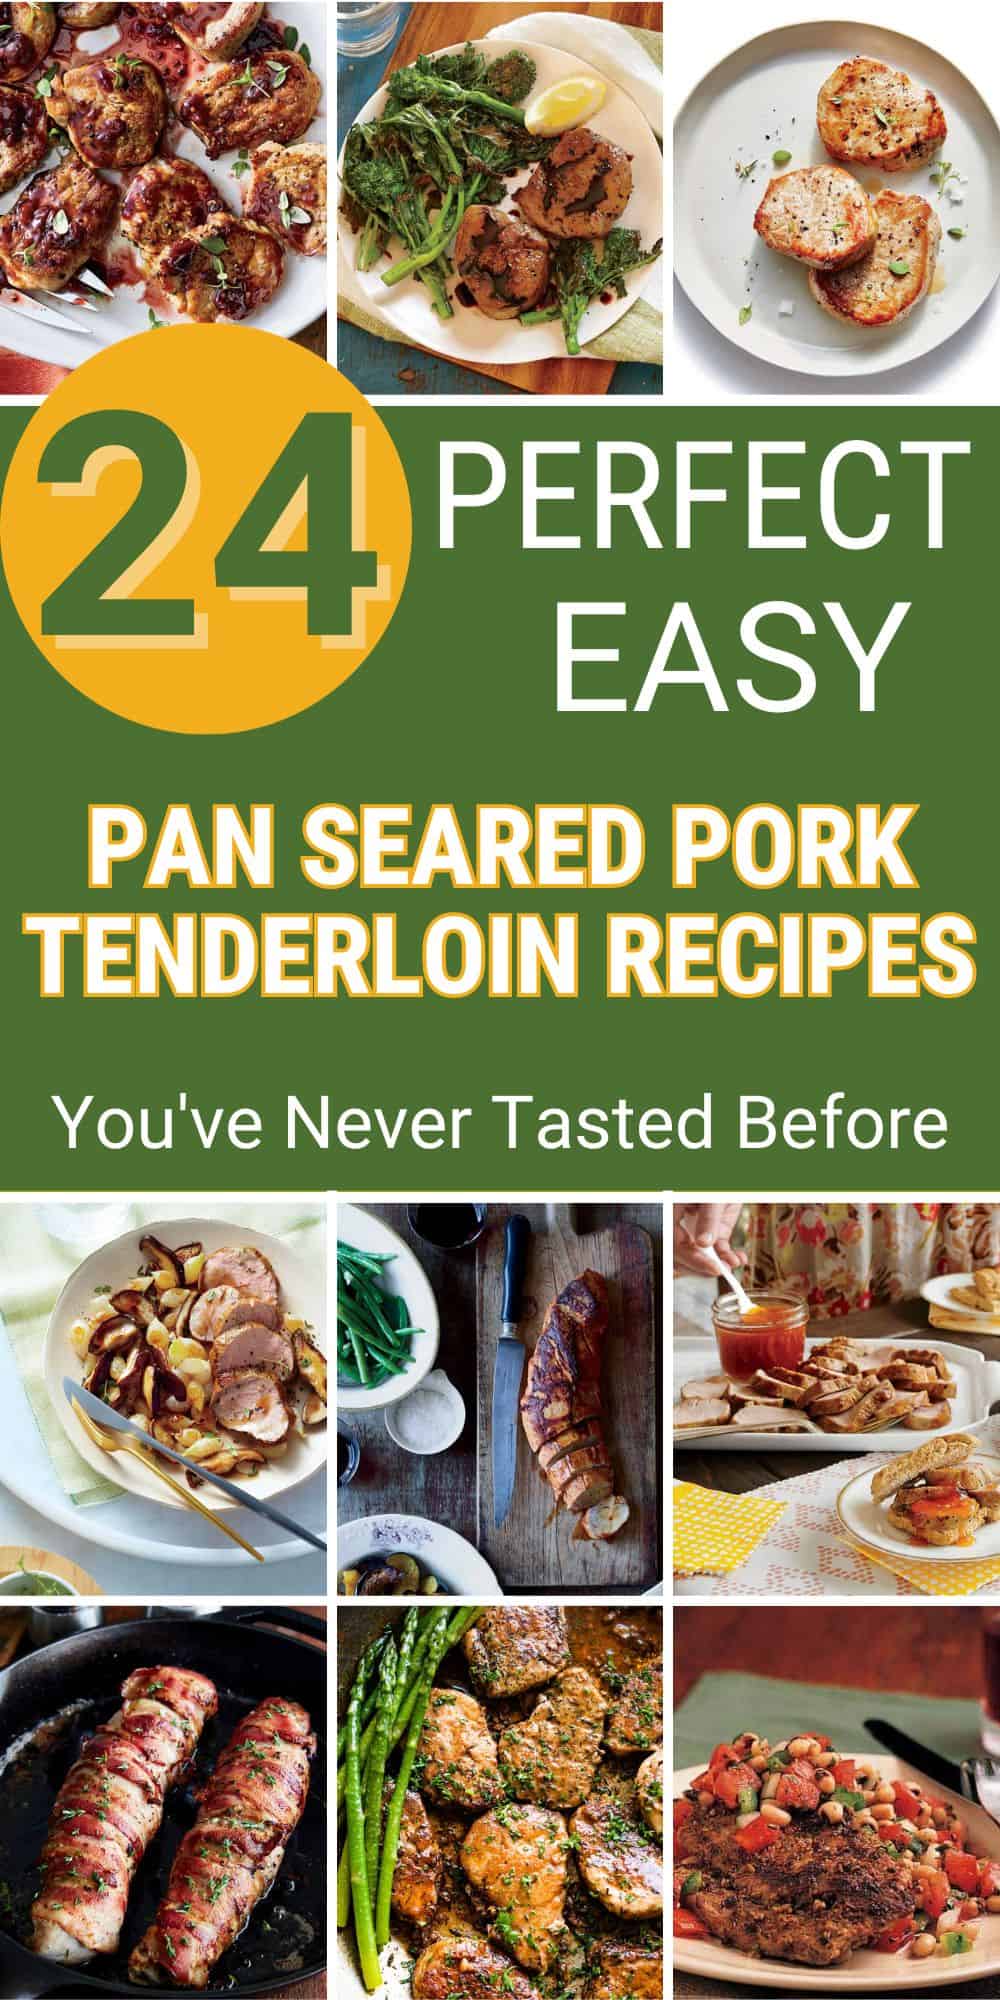 Pan Seared Pork Tenderloin Recipe